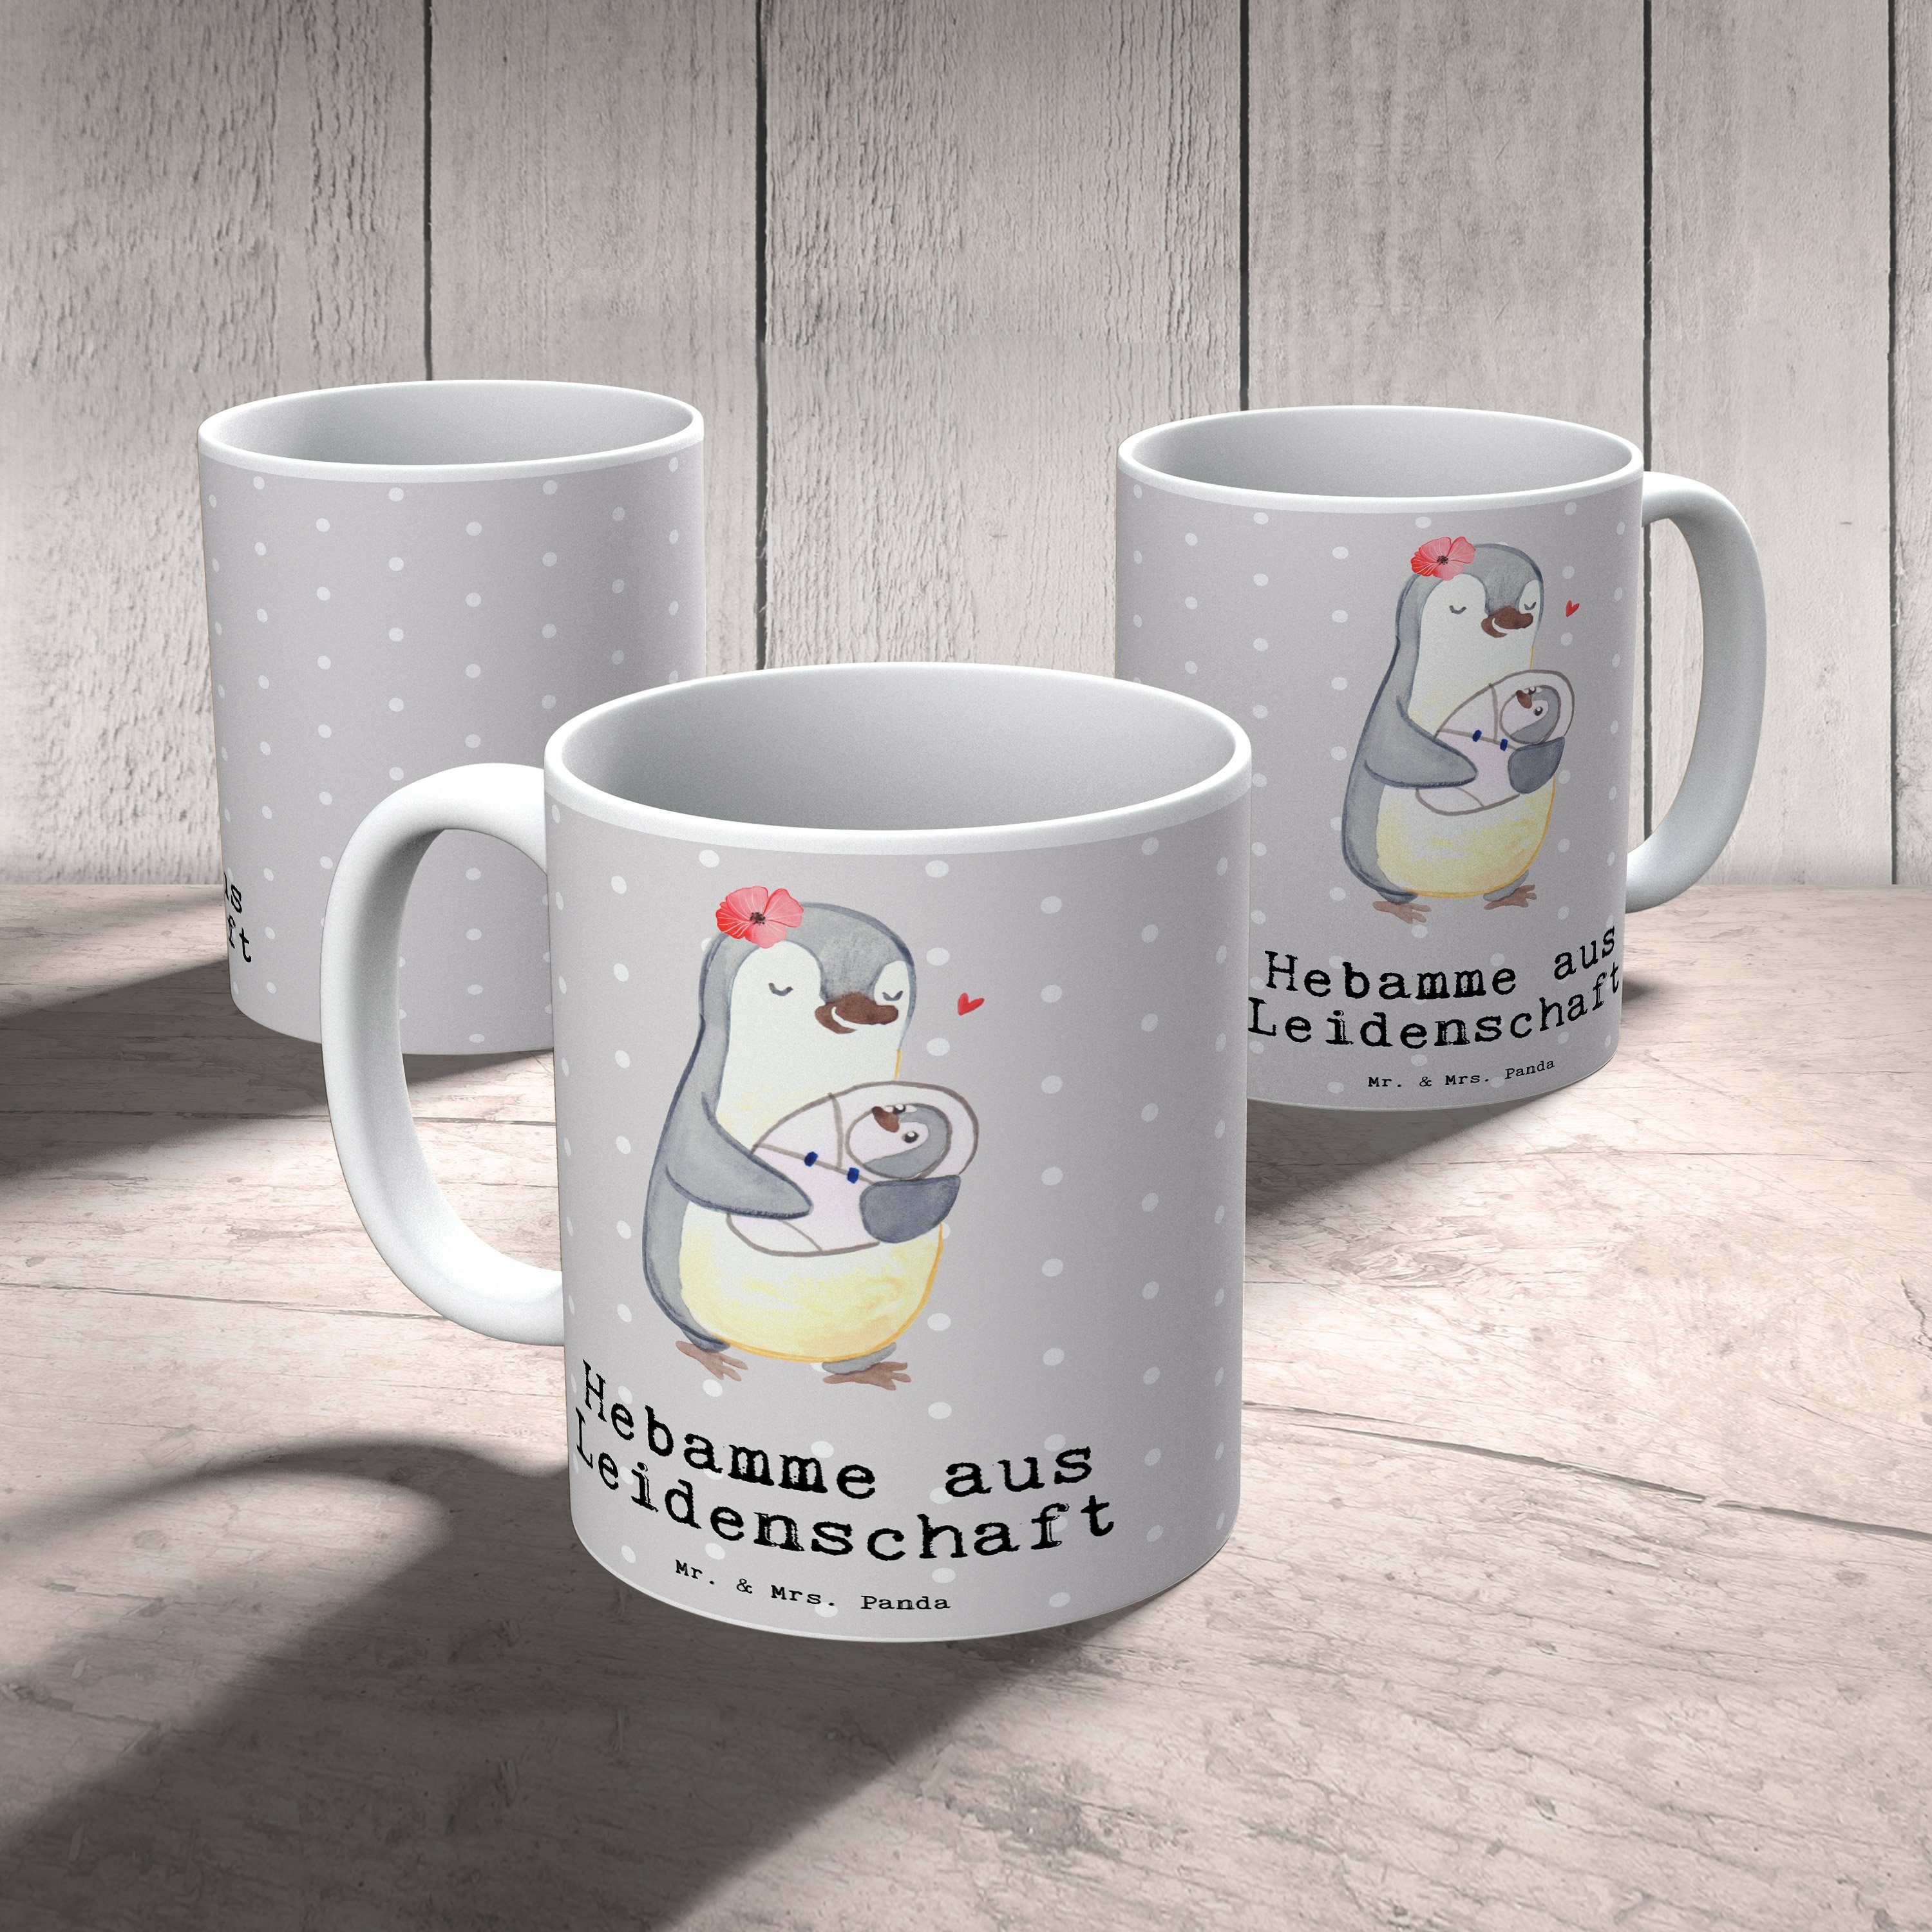 Mr. & Mrs. Panda Grau Keramiktas, Firma, - Pastell Hebamme - aus Keramik Geschenk, Leidenschaft Tasse